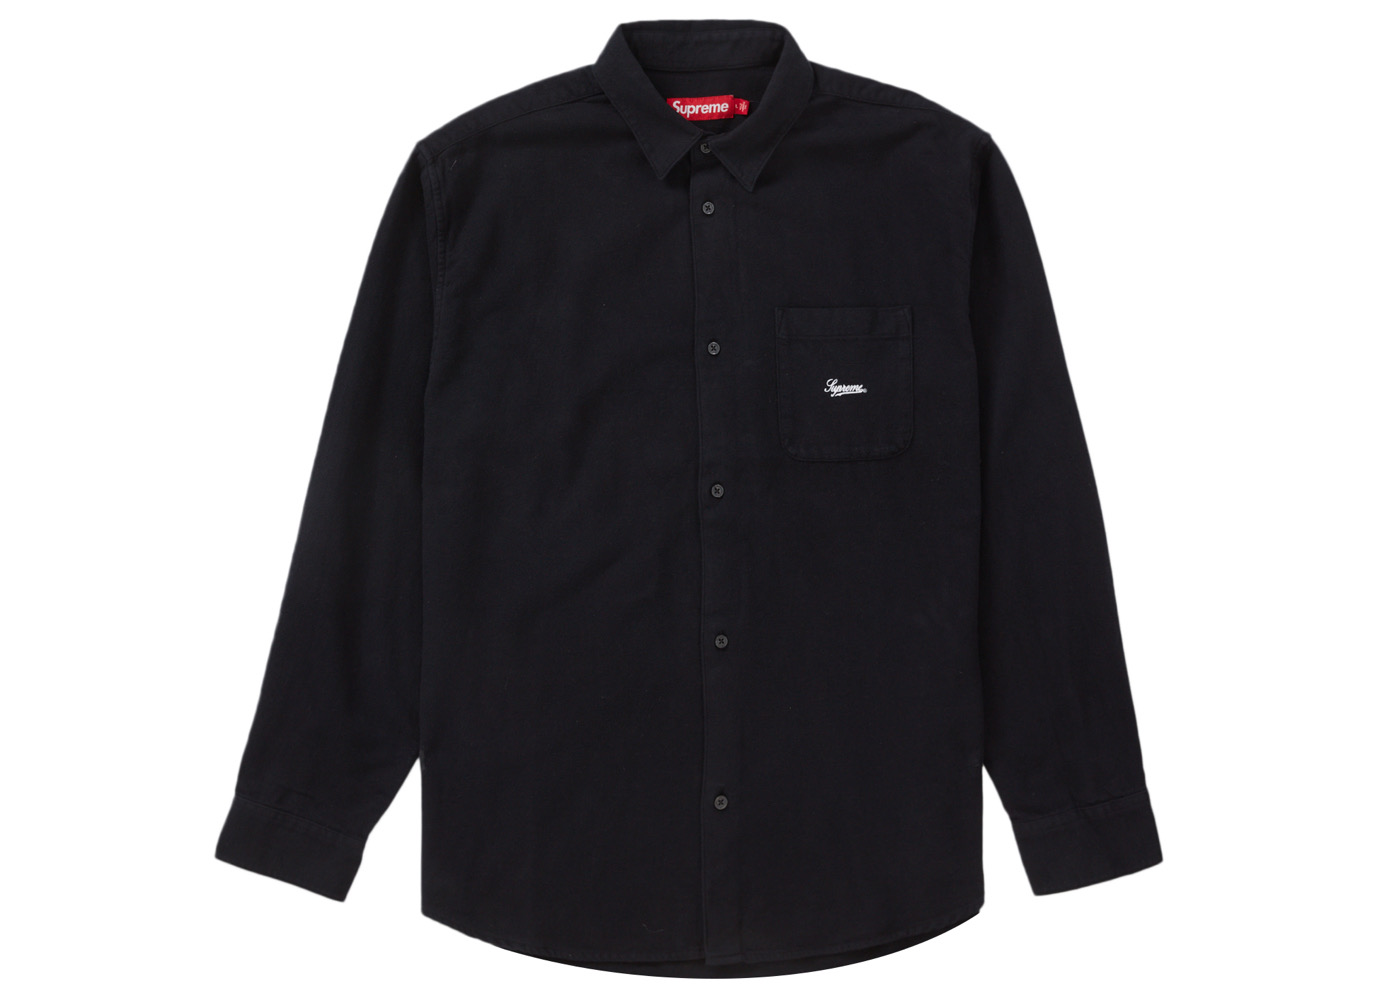 Supreme x Undercover short-sleeve Flannel Shirt - Farfetch